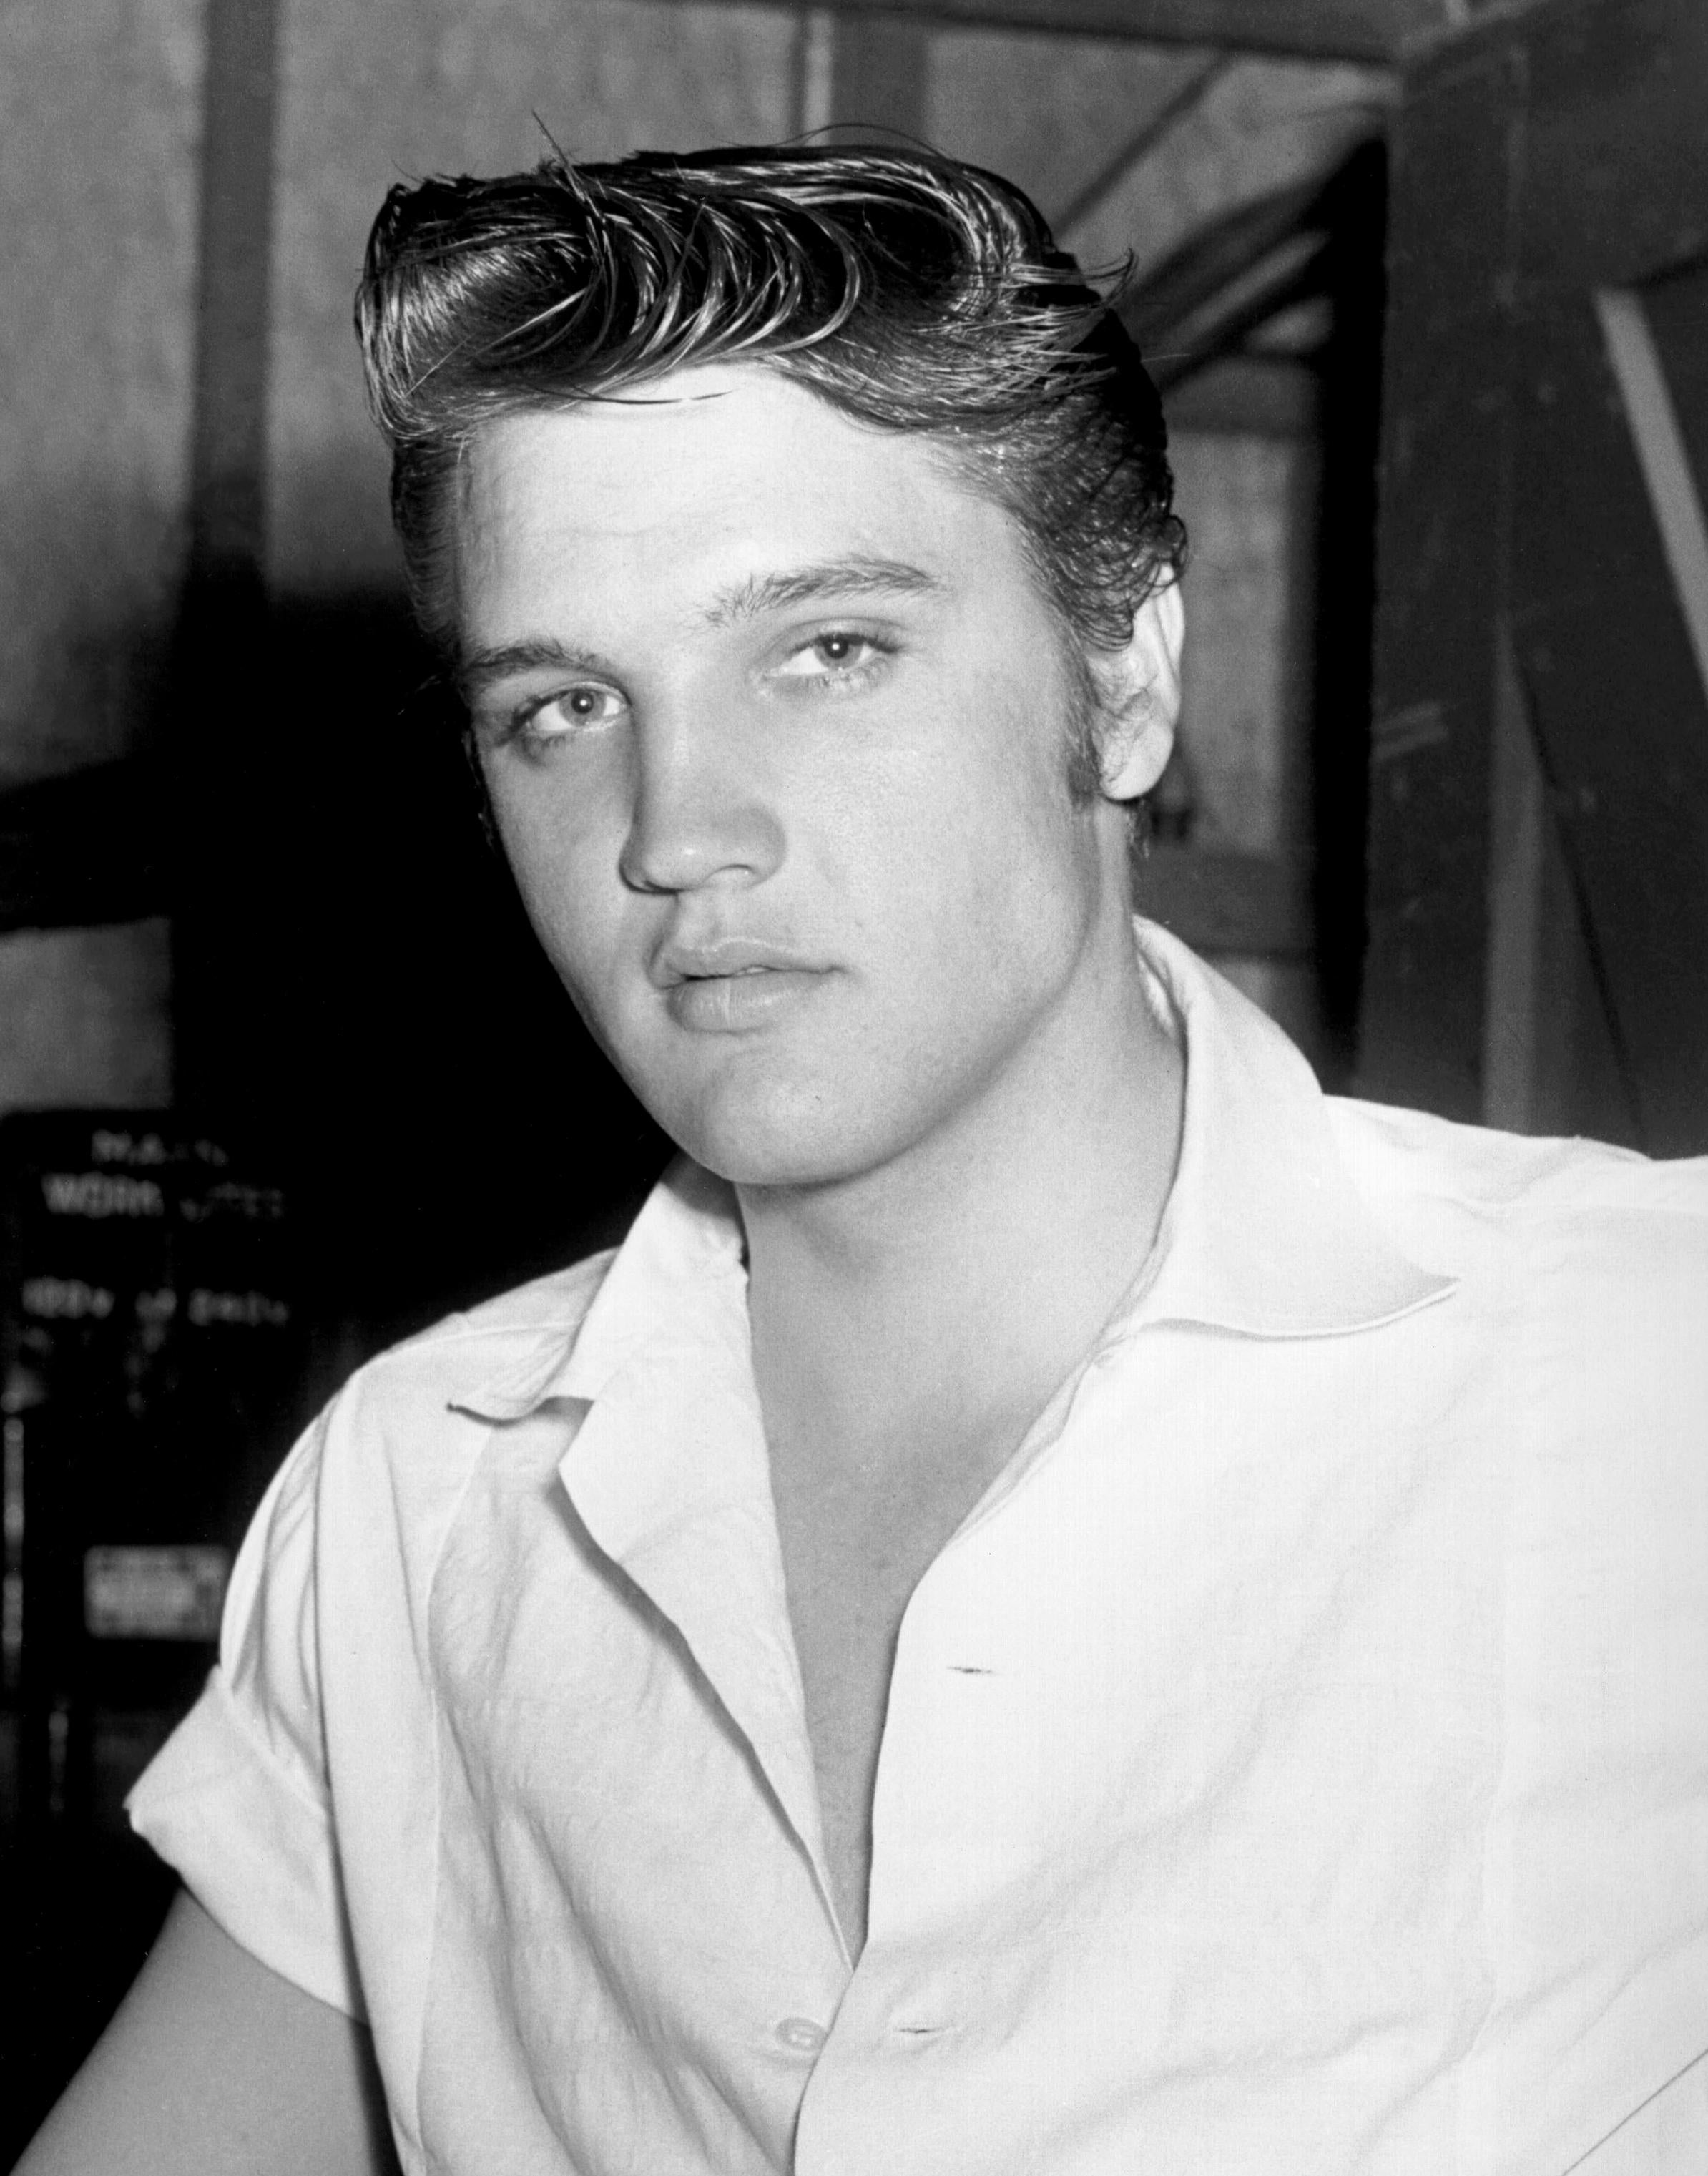 Unknown Portrait Photograph - Elvis Presley: Handsome Young Star Globe Photos Fine Art Print